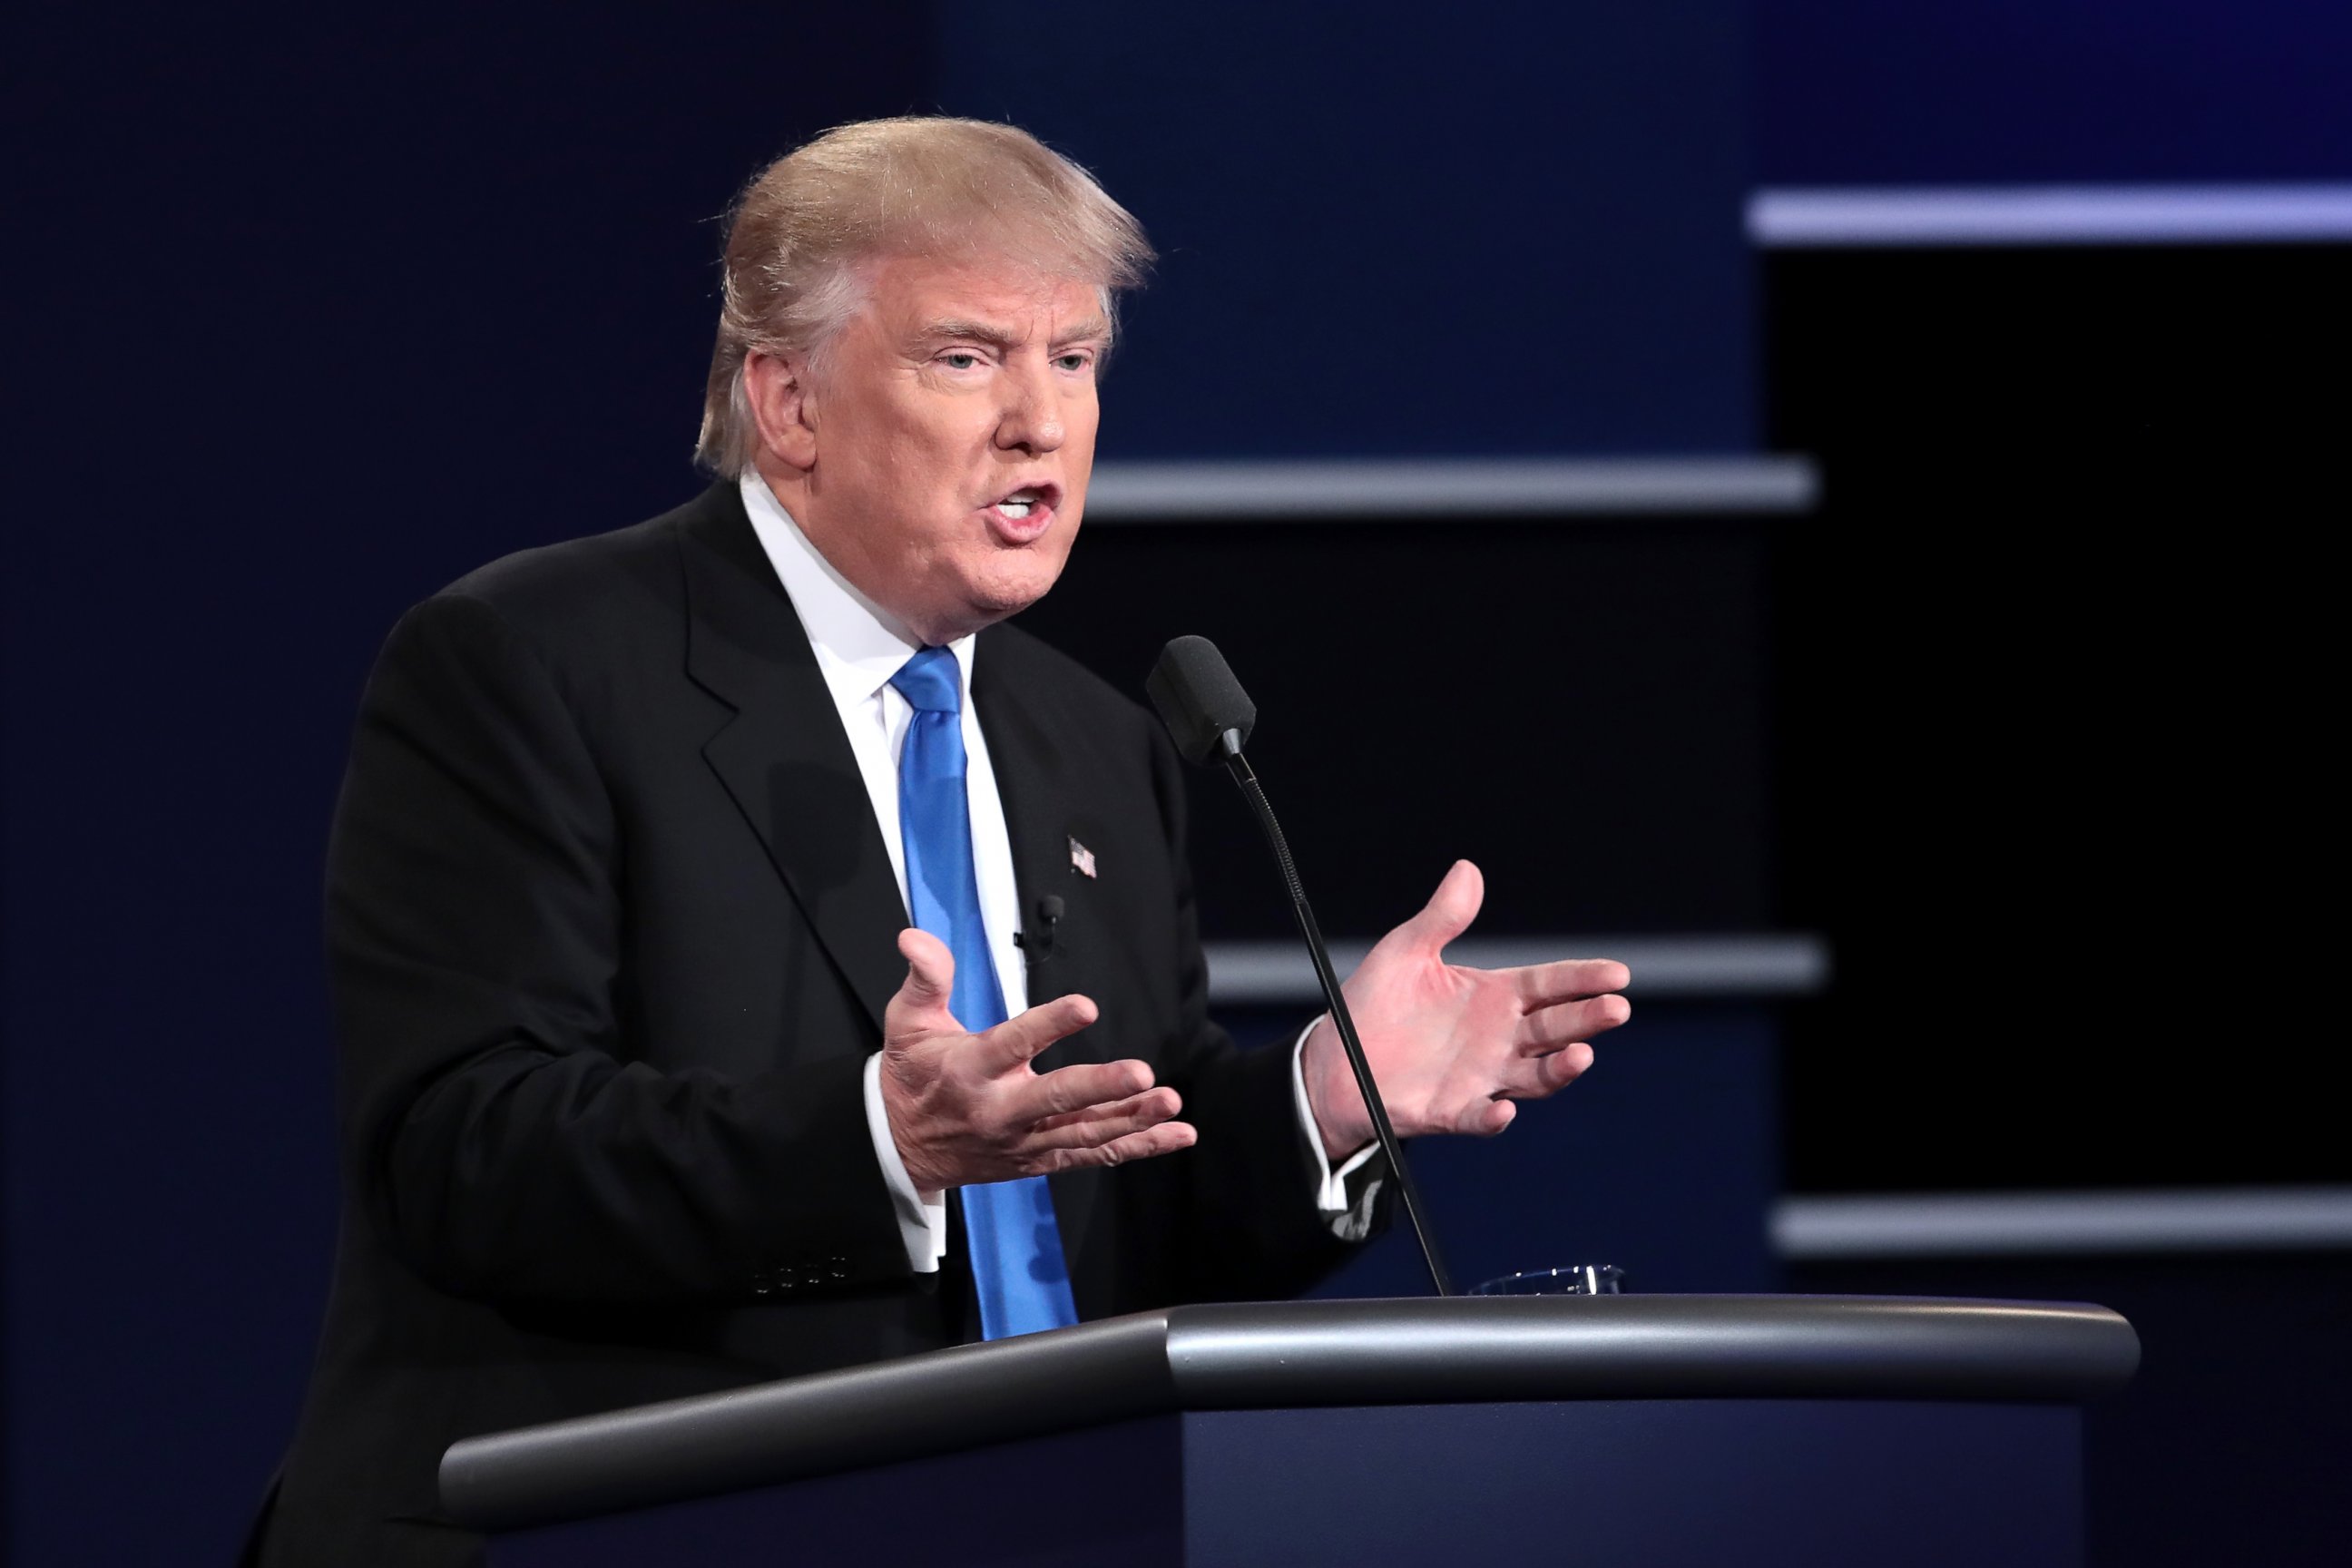 PHOTO: Republican presidential nominee Donald Trump speaks during the Presidential Debate at Hofstra University on September 26, 2016 in Hempstead, New York.